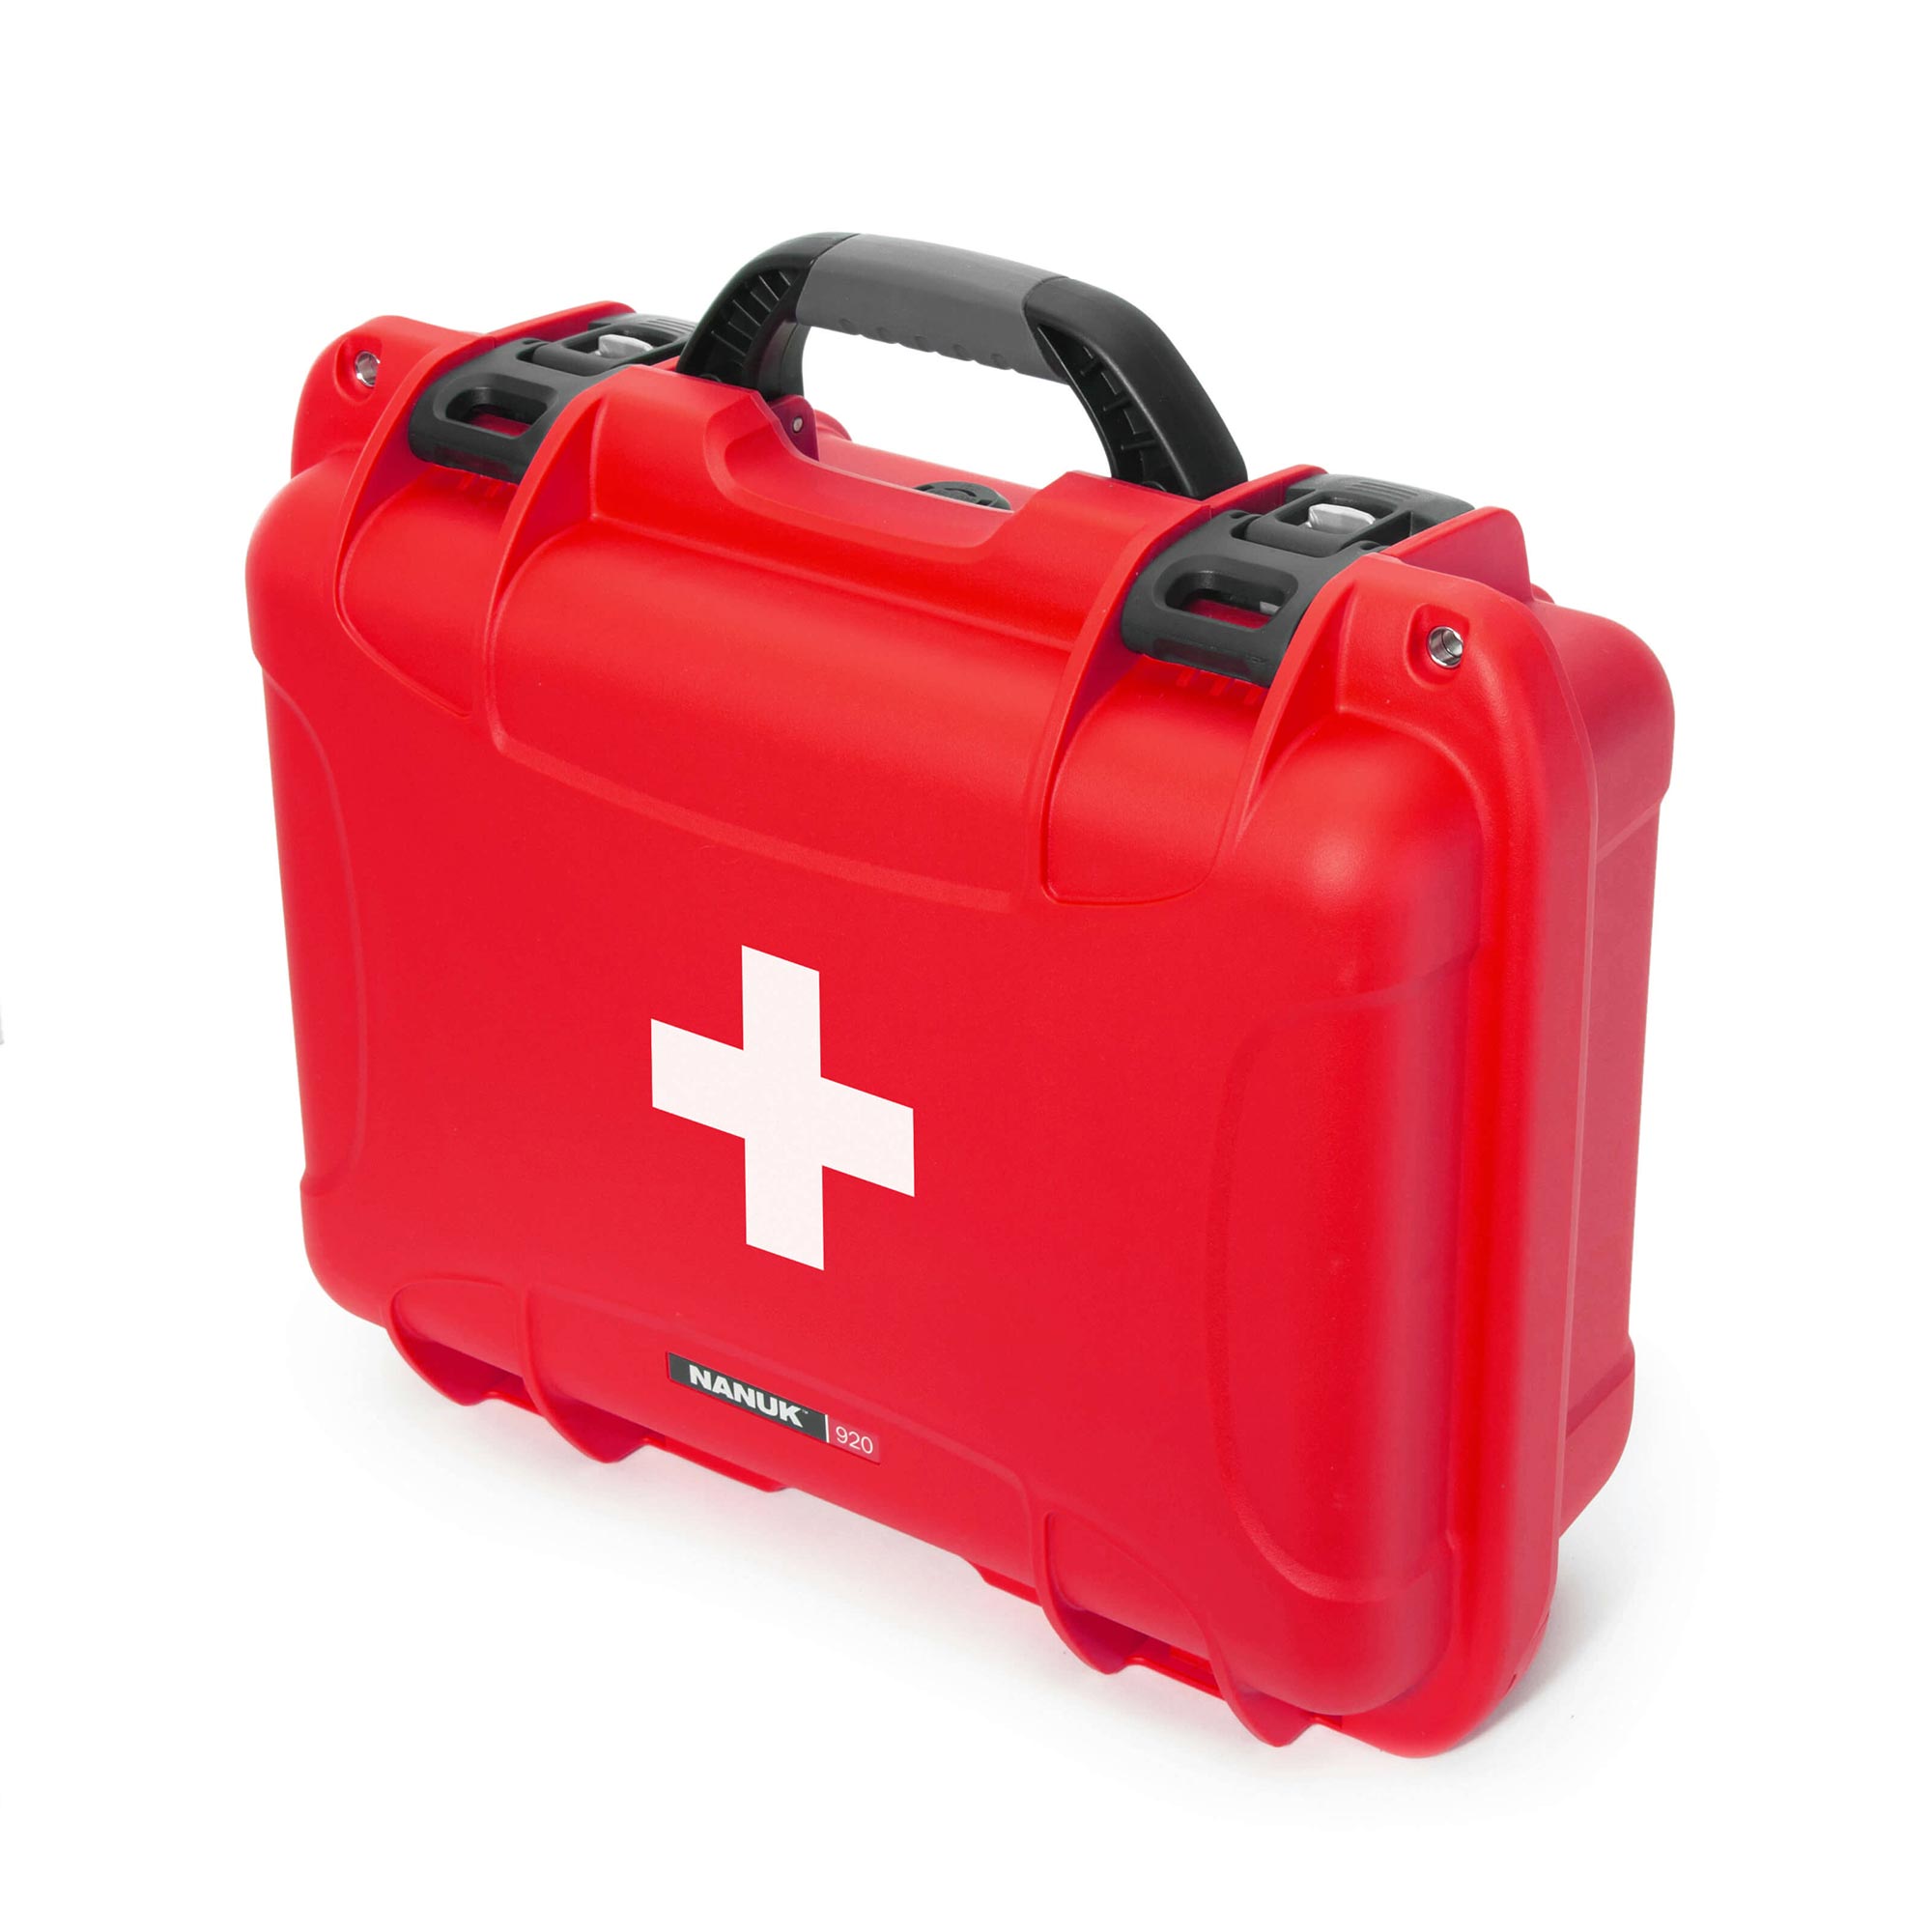 NANUK 920 First Aid case-Outdoor Case-Red-NANUK